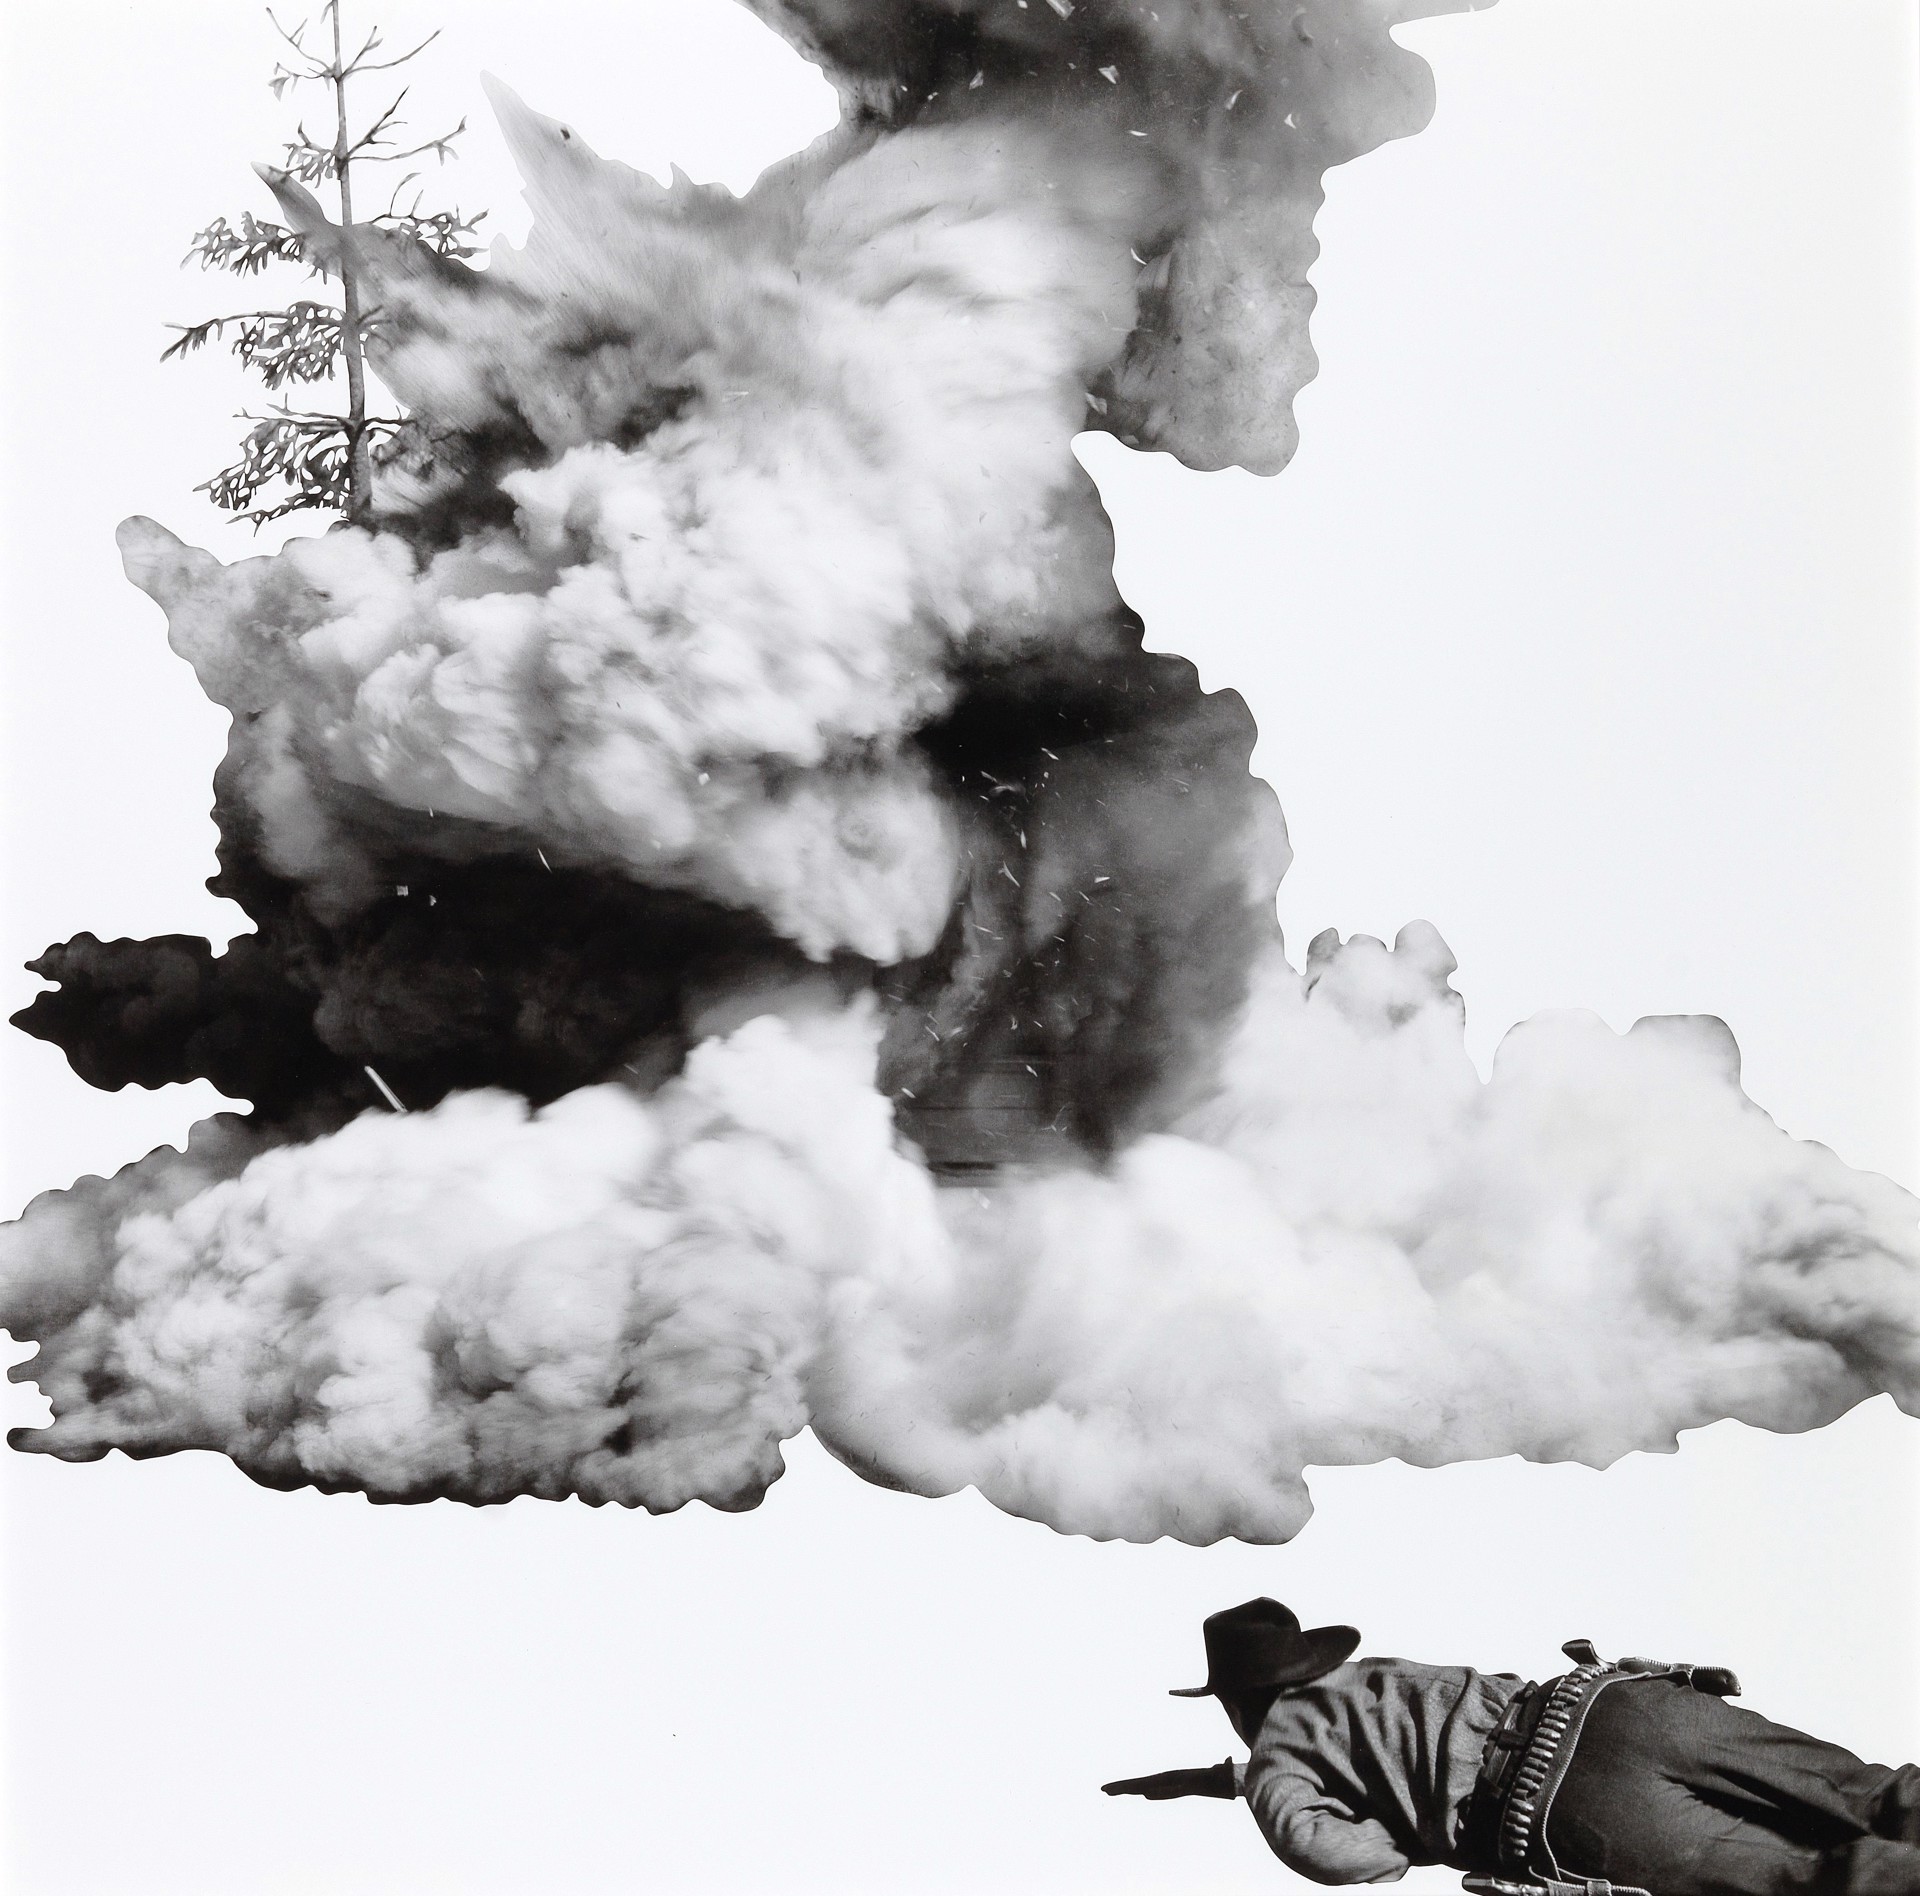 Smoke, Tree, Shadow and Person by John Baldessari